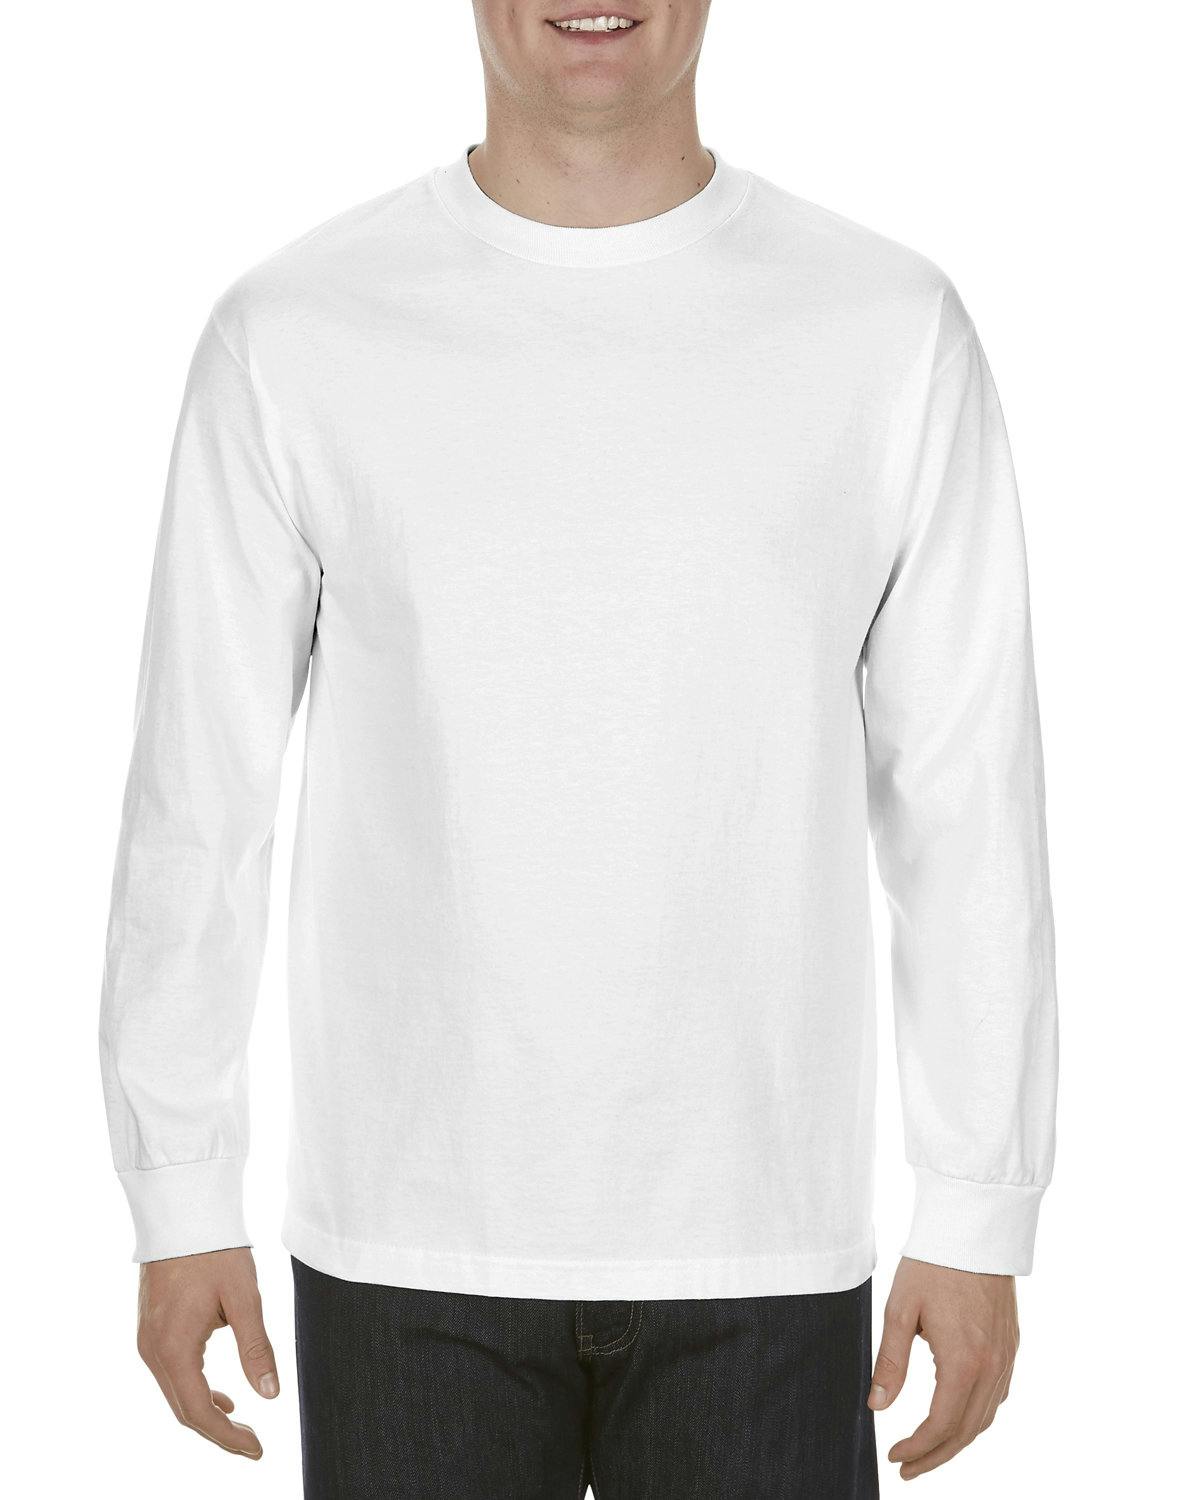 Image for Adult 5.1 oz., 100% Soft Spun Cotton Long-Sleeve T-Shirt